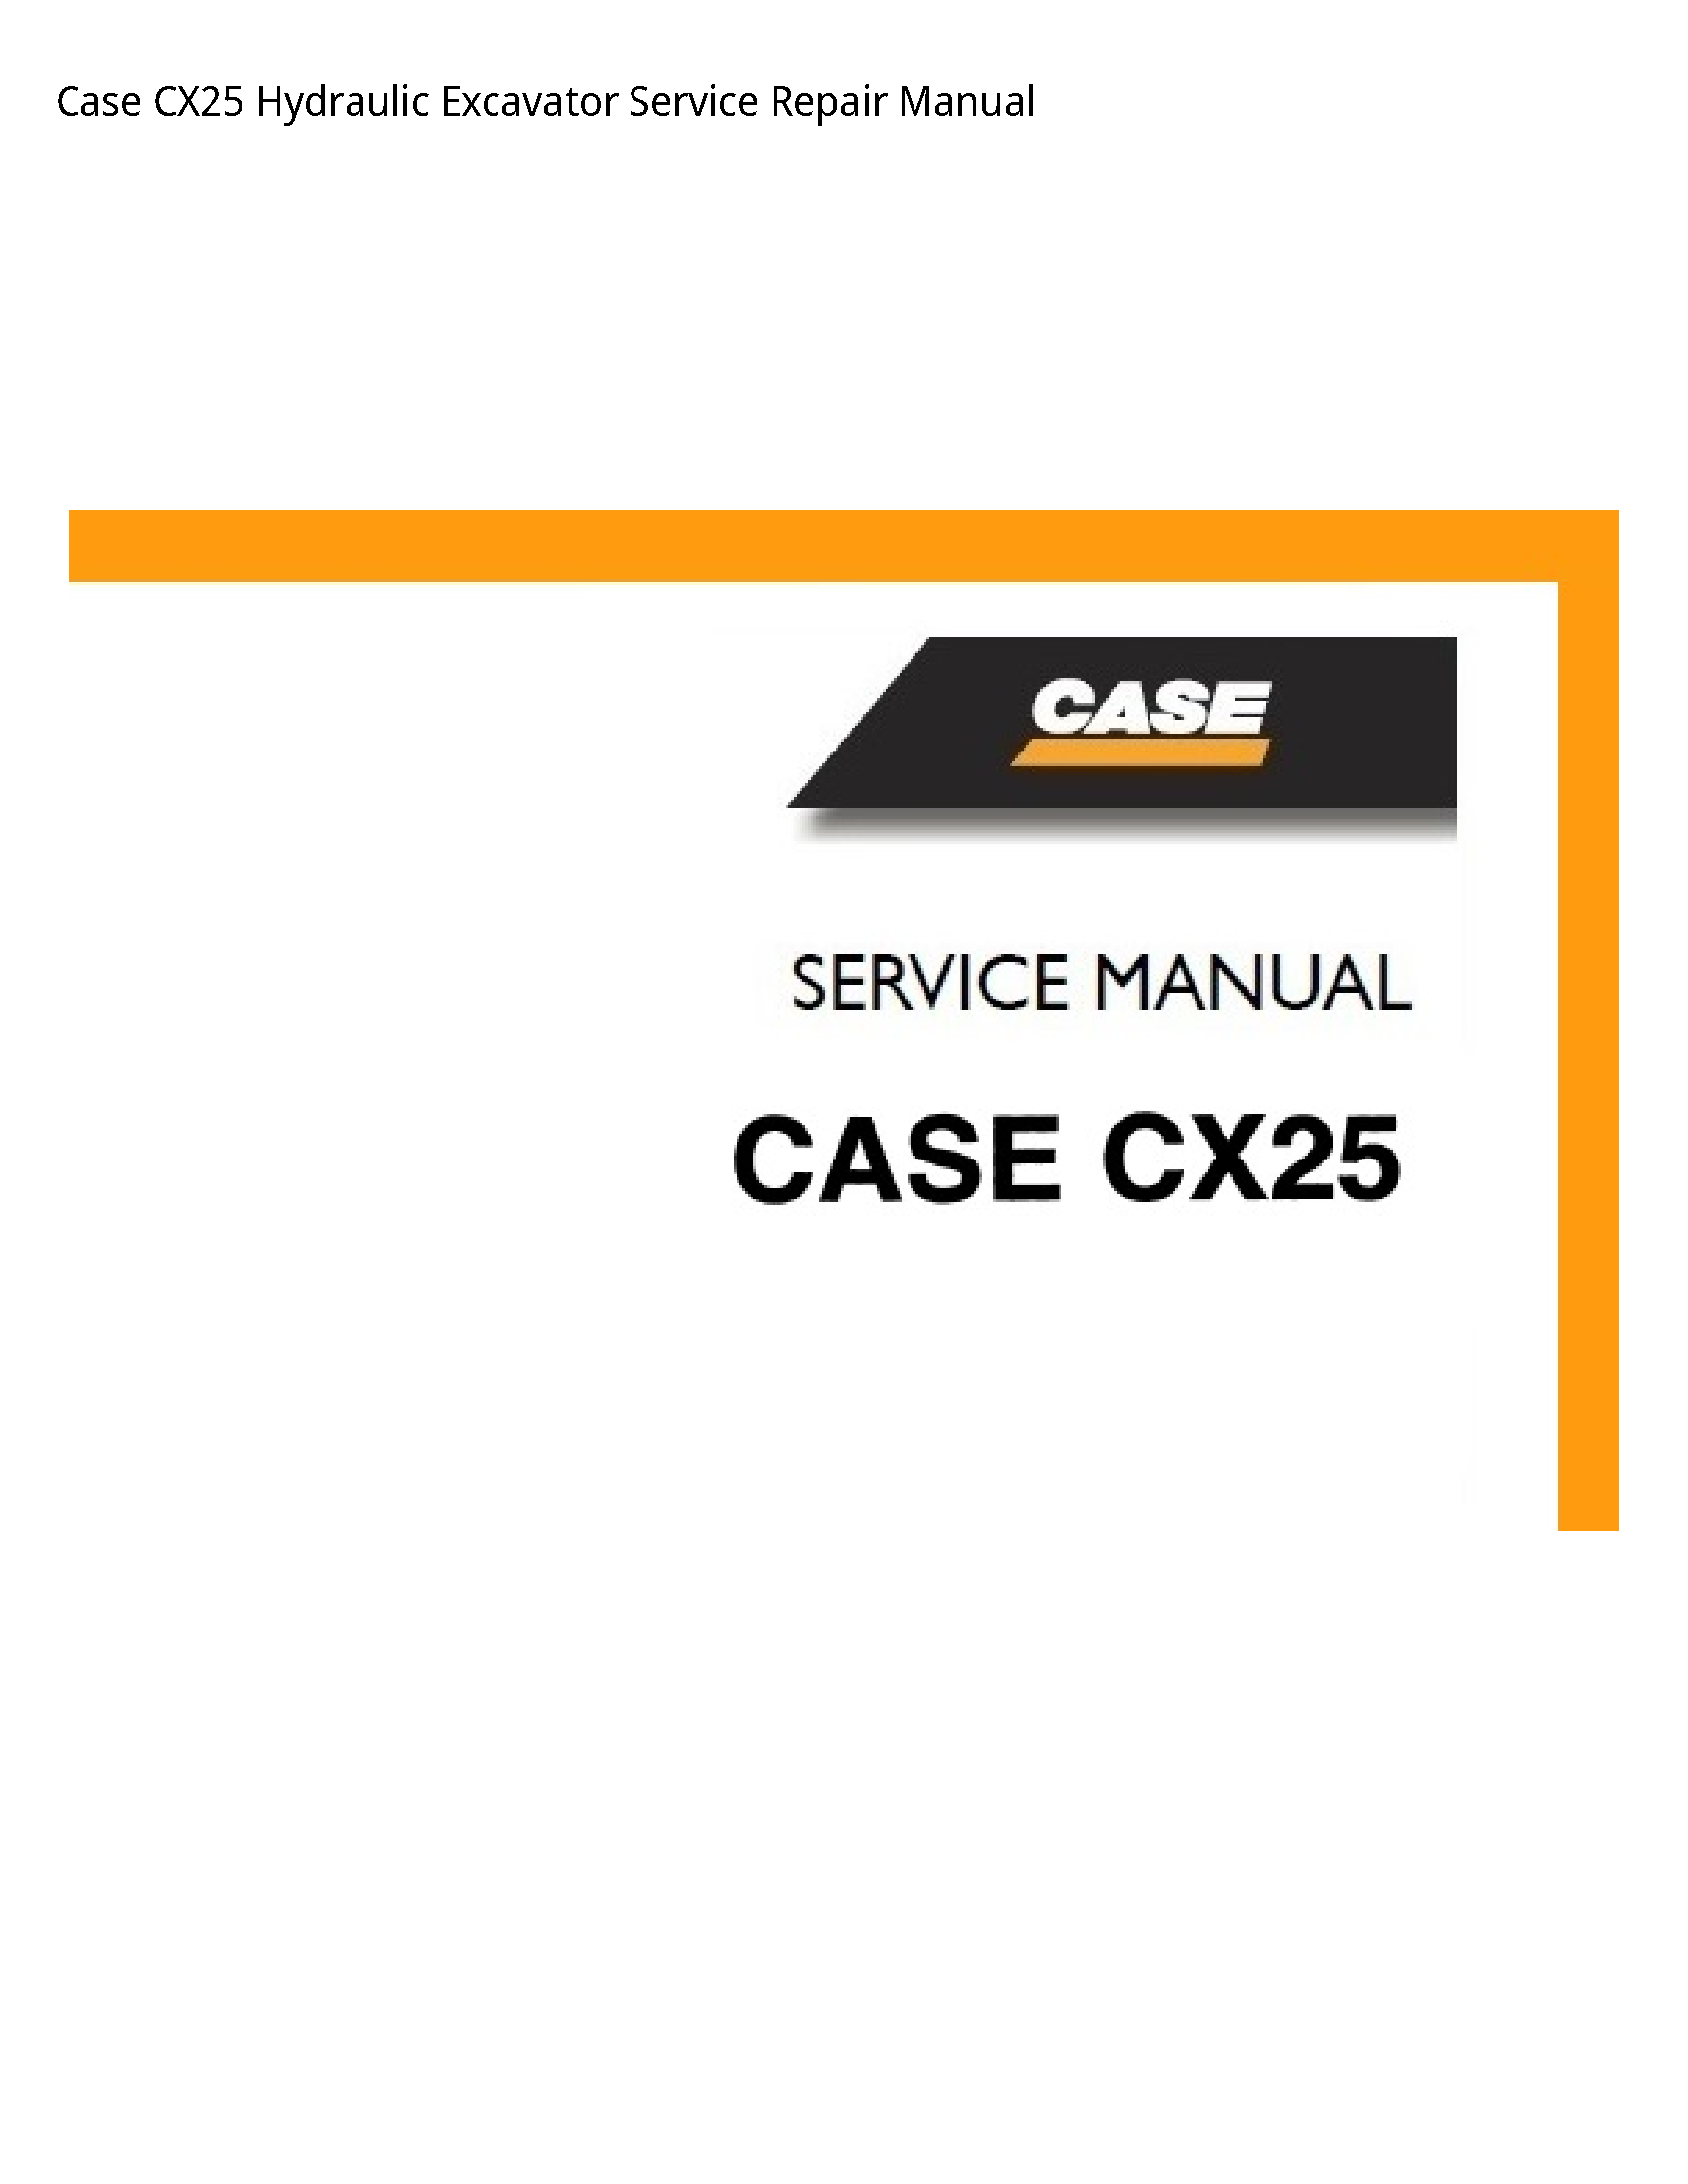 Case/Case IH CX25 Hydraulic Excavator manual